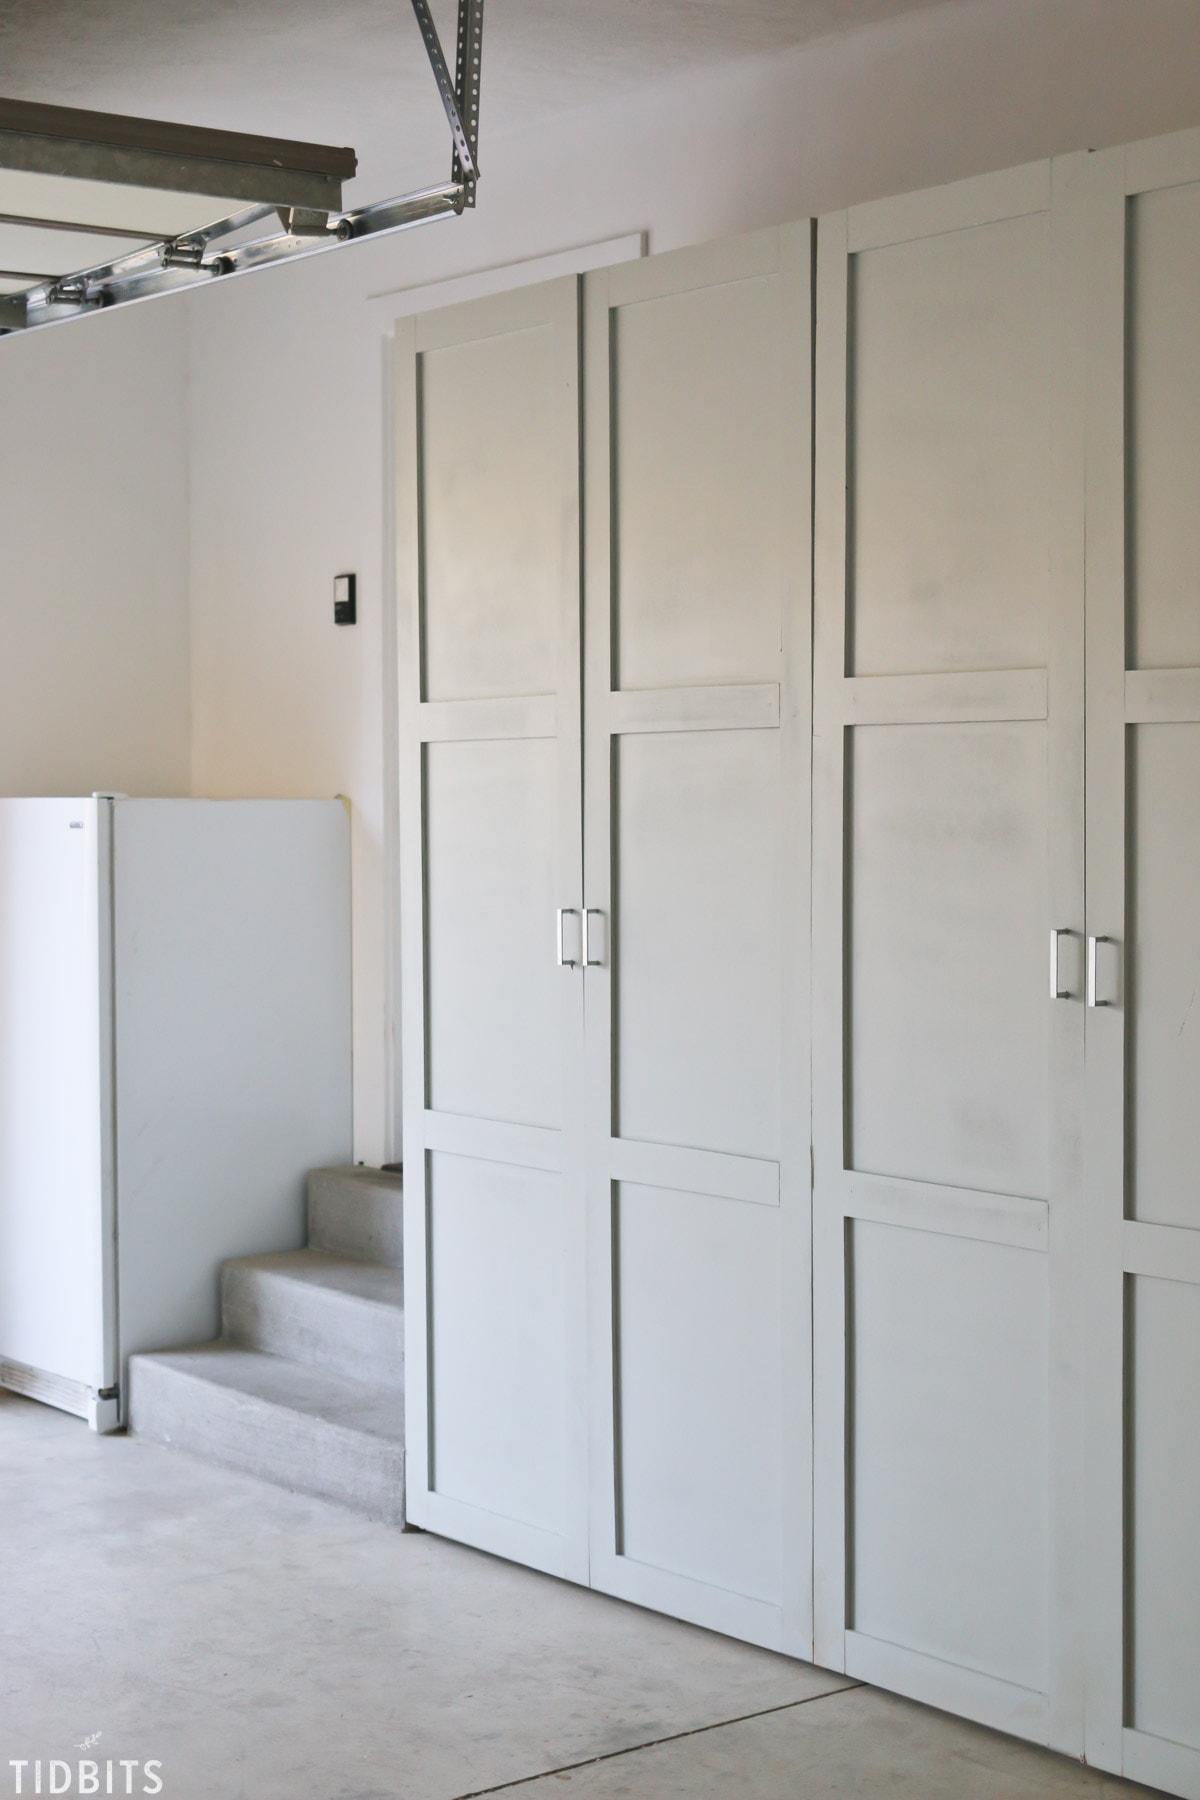 Garage Storage Cabinets Free Building, Built In Storage Cabinet For Garage Doors